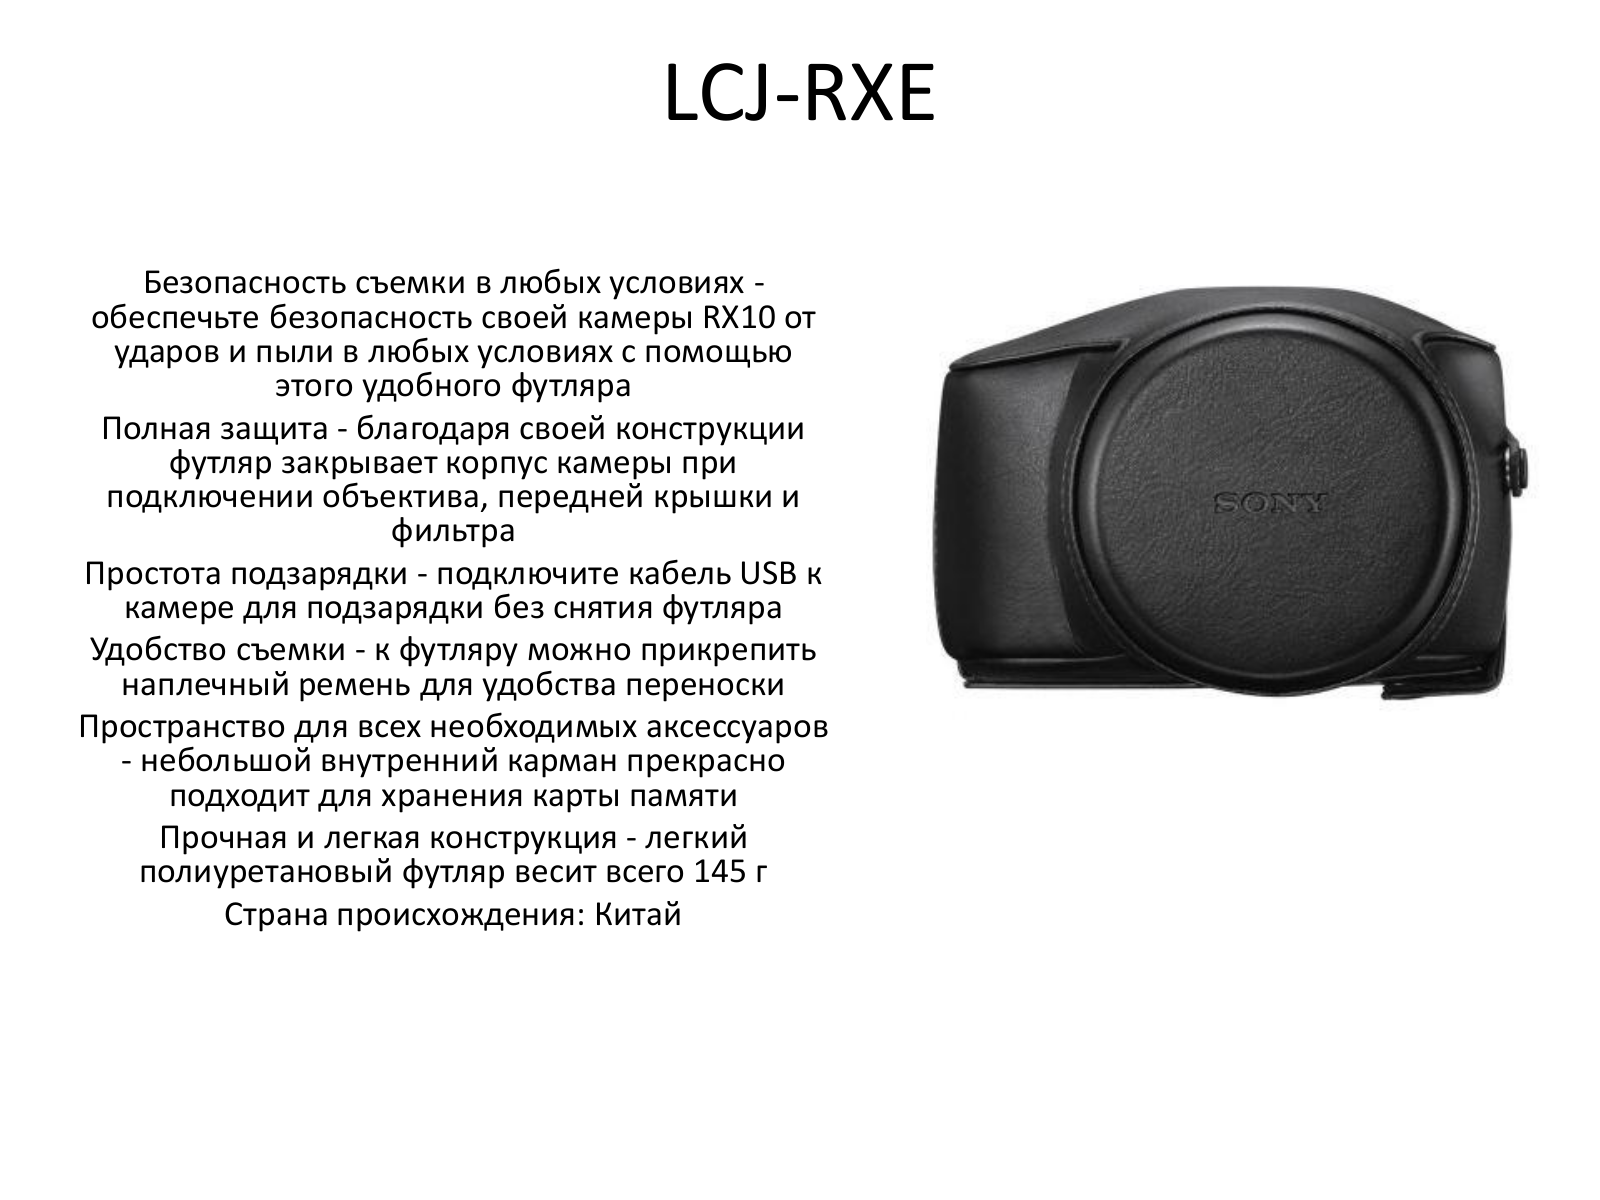 Sony LCJ-RXE User Manual